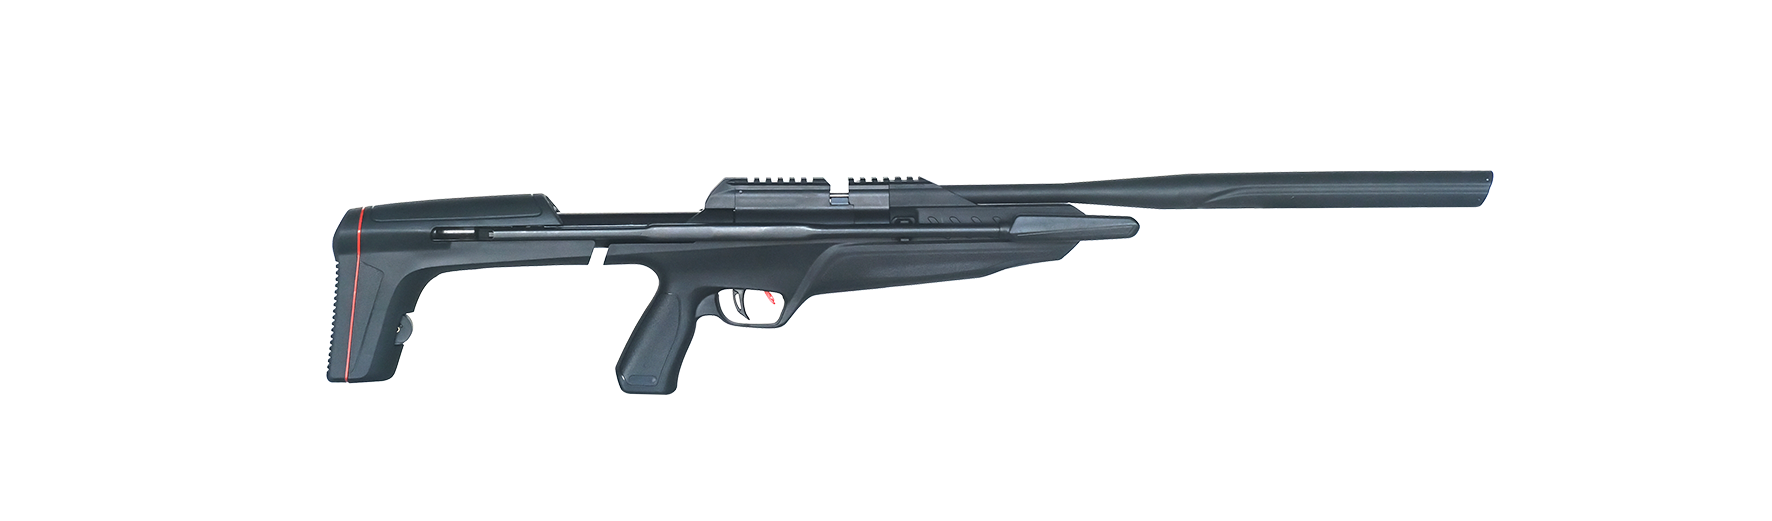 SL900S